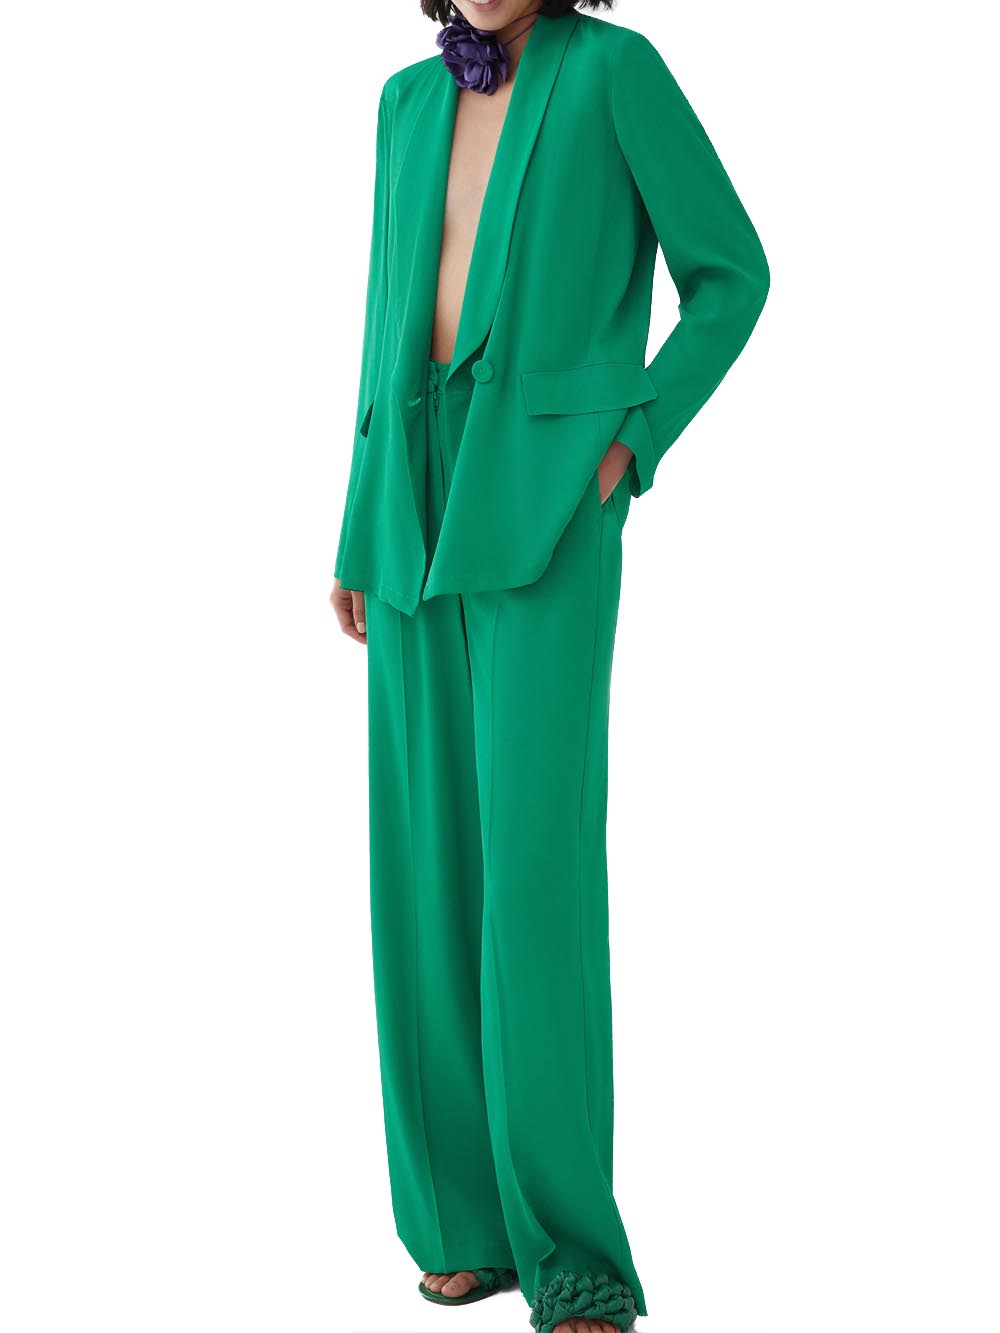 iBlues Pantalone Donna Dono Verde smeraldo